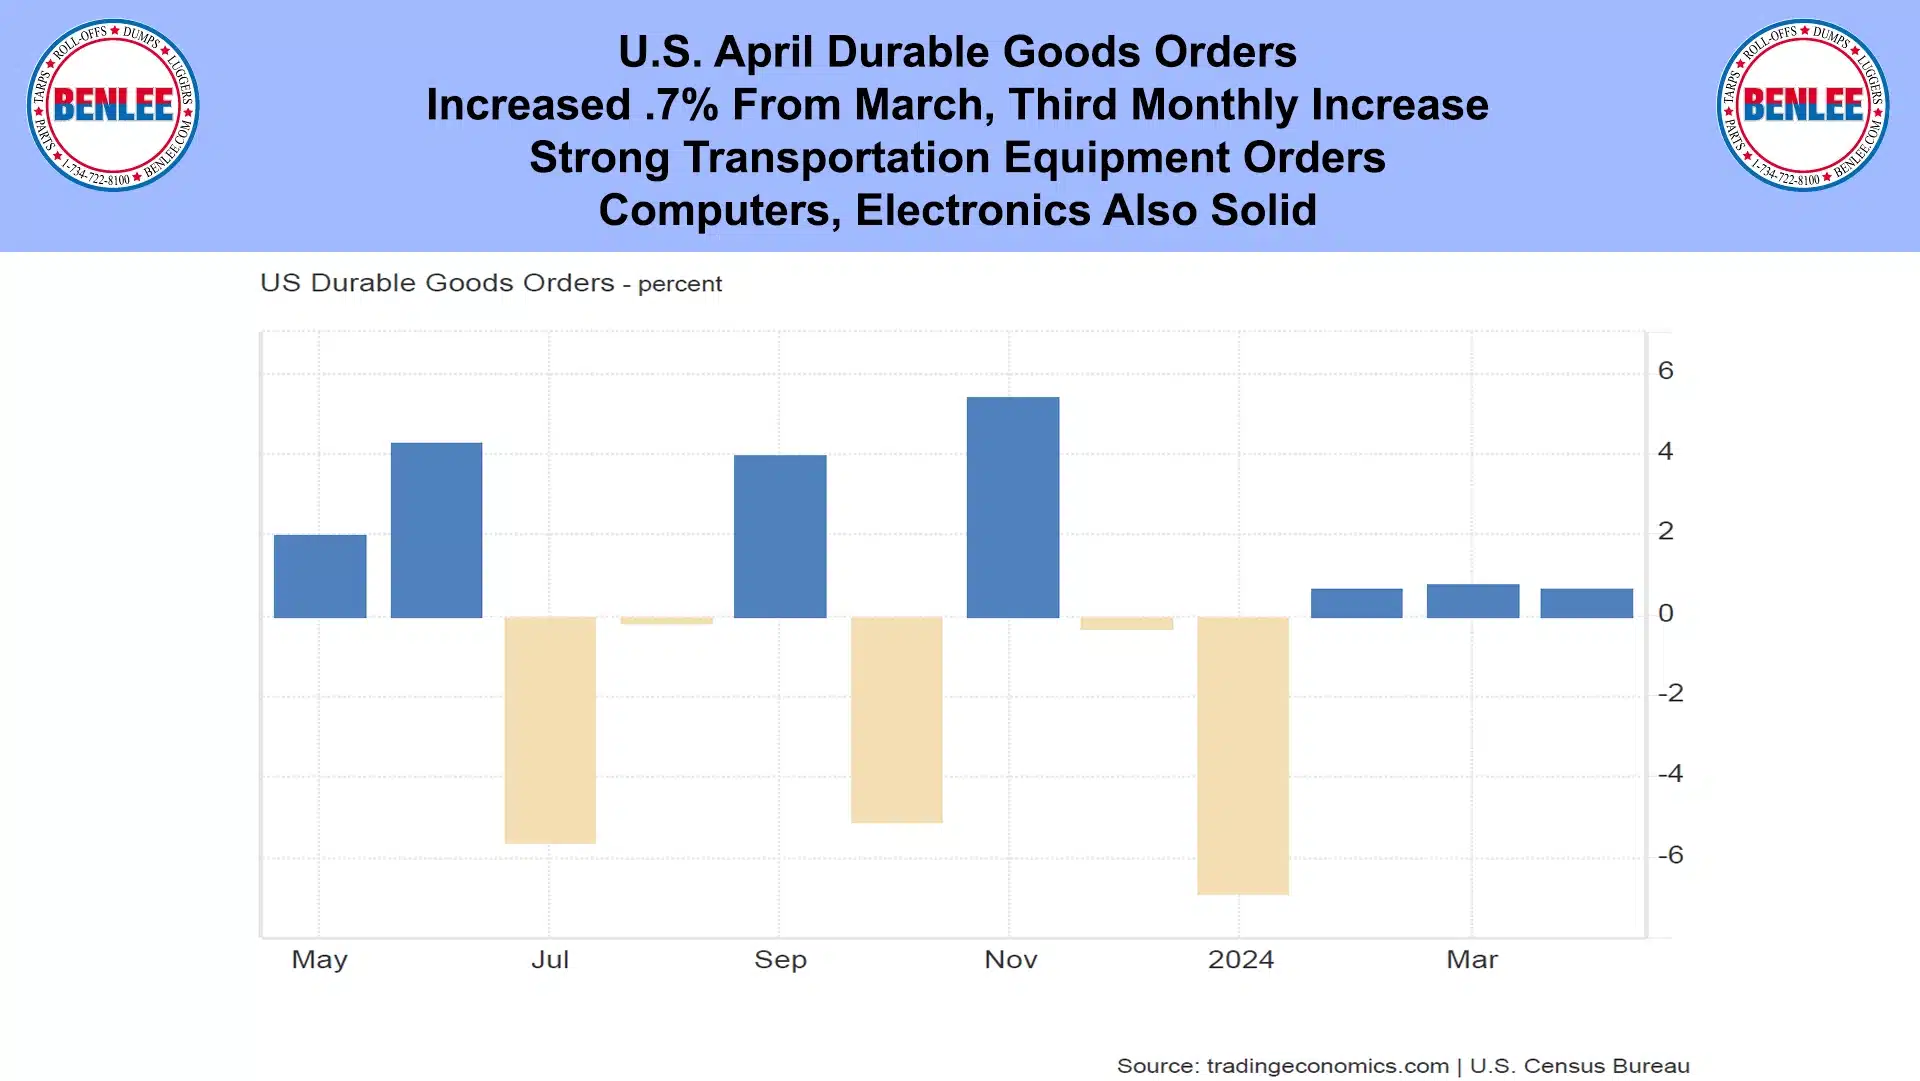 U.S. April Durable Goods Orders